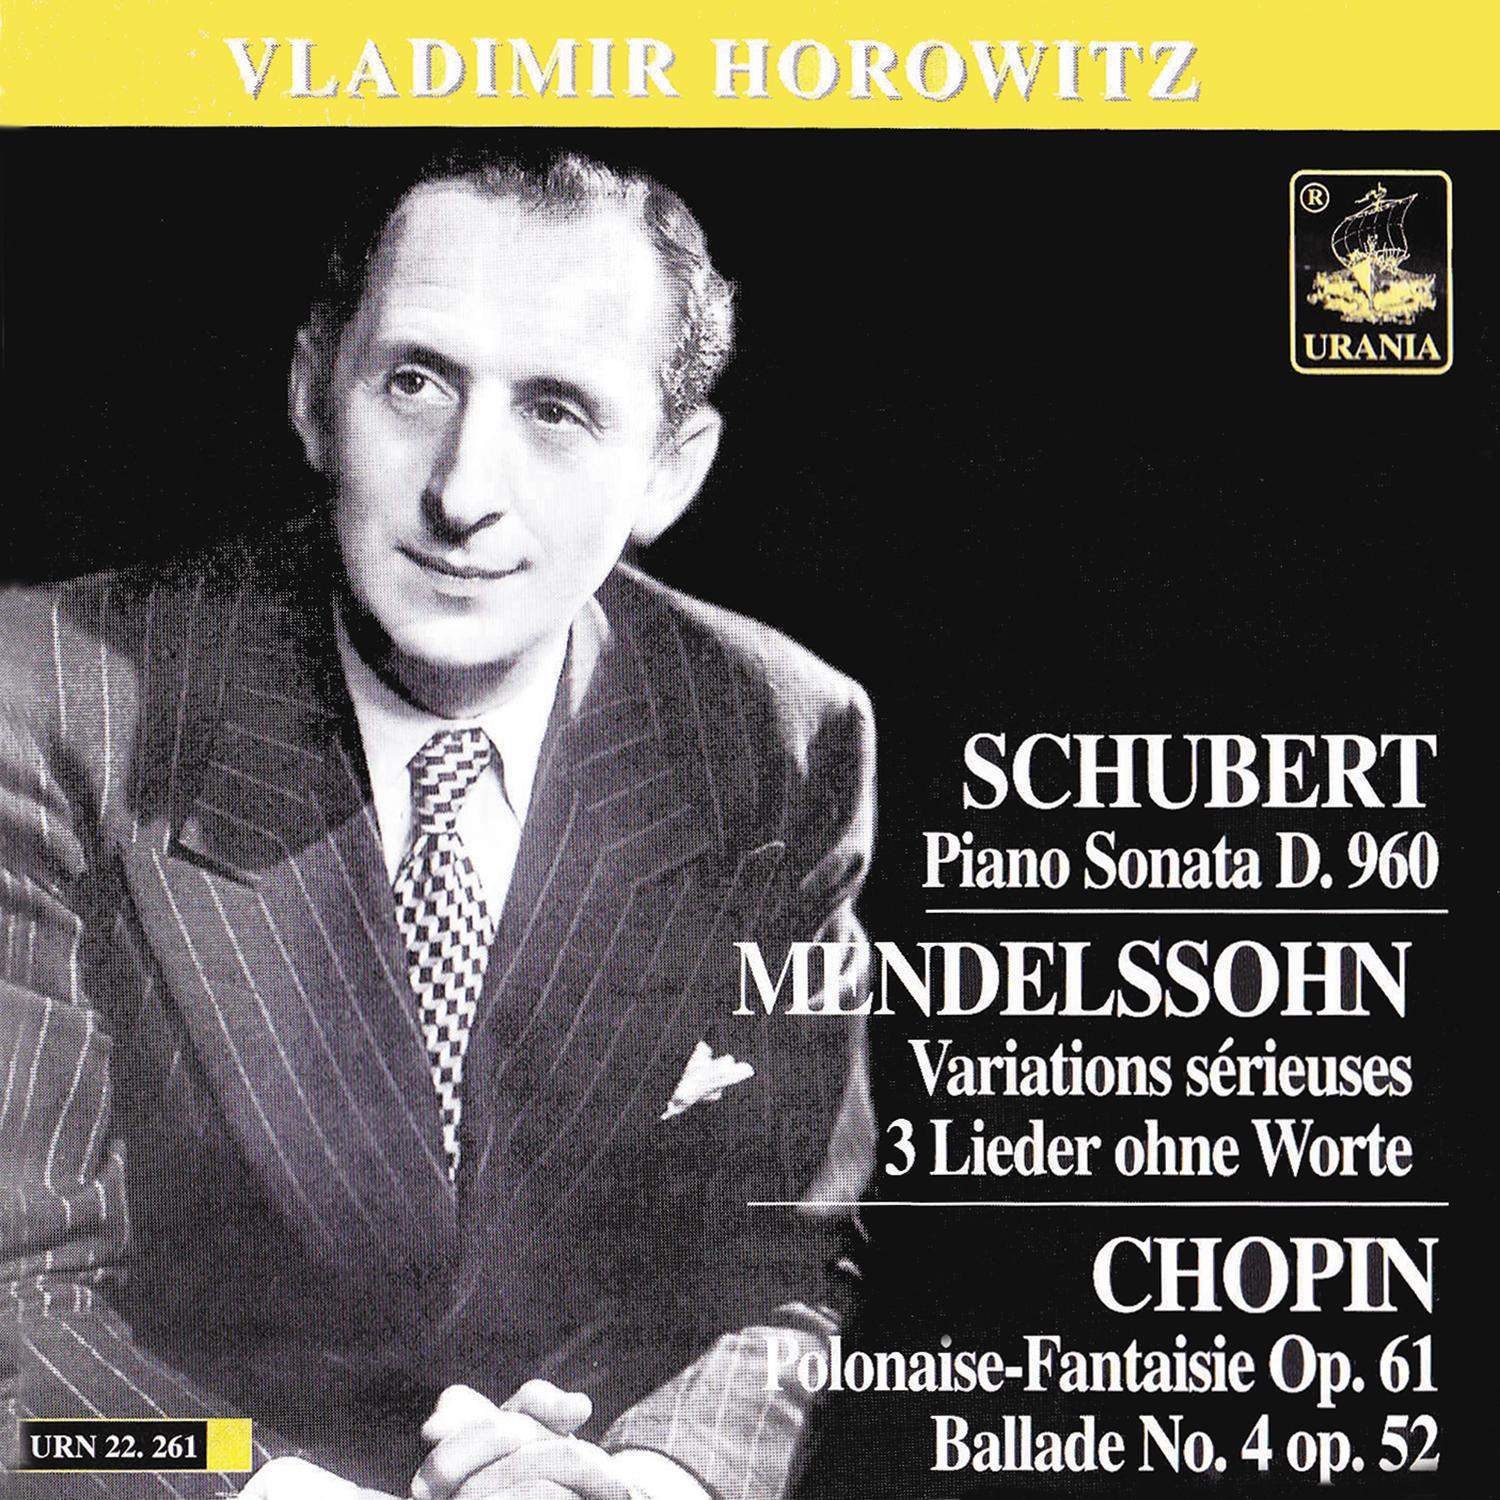 Schubert: Piano Sonara, D. 930  Mendelssohn: Variations Se rieuses  3 Lieder  Chopin: PolonaiseFantasie  Ballade No. 4